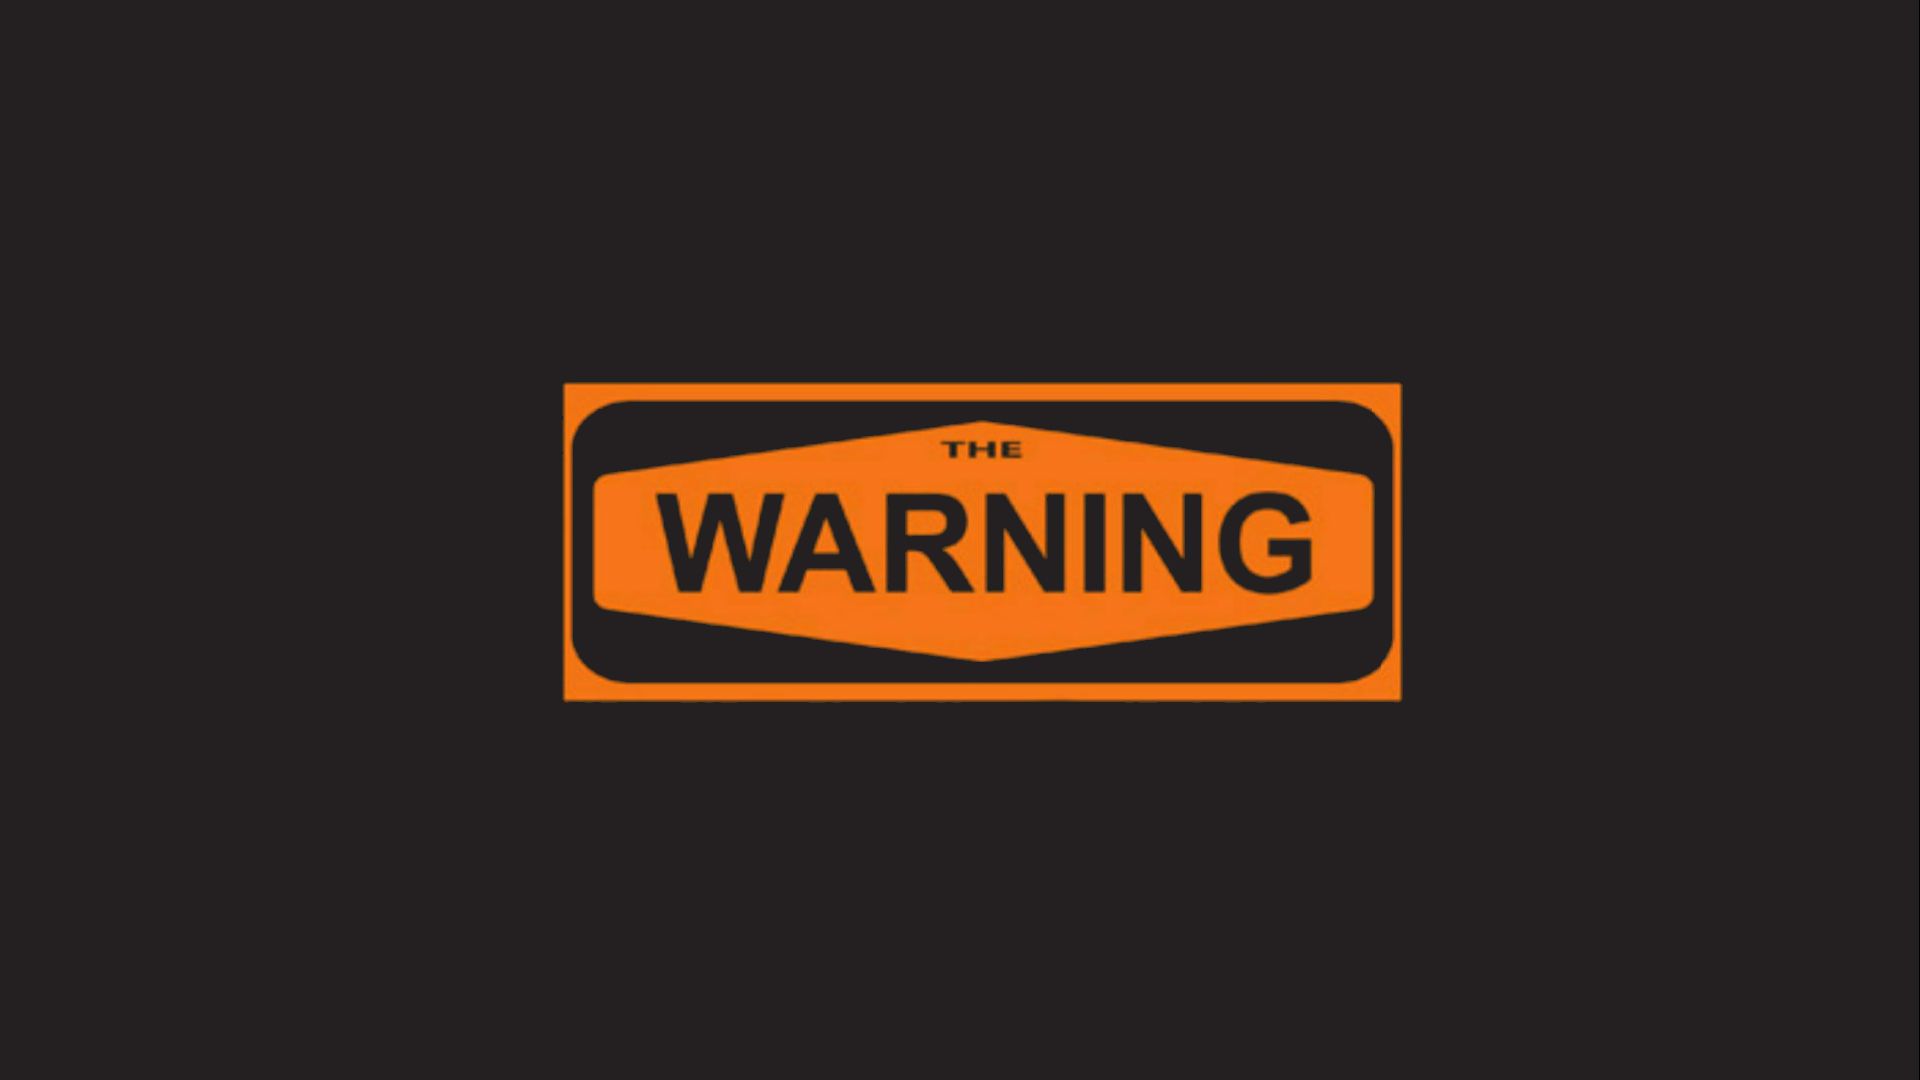 Warning Wallpaper. Warning Wallpaper, Confusing Warning Signs Wallpaper and Aperture Science Warning Wallpaper